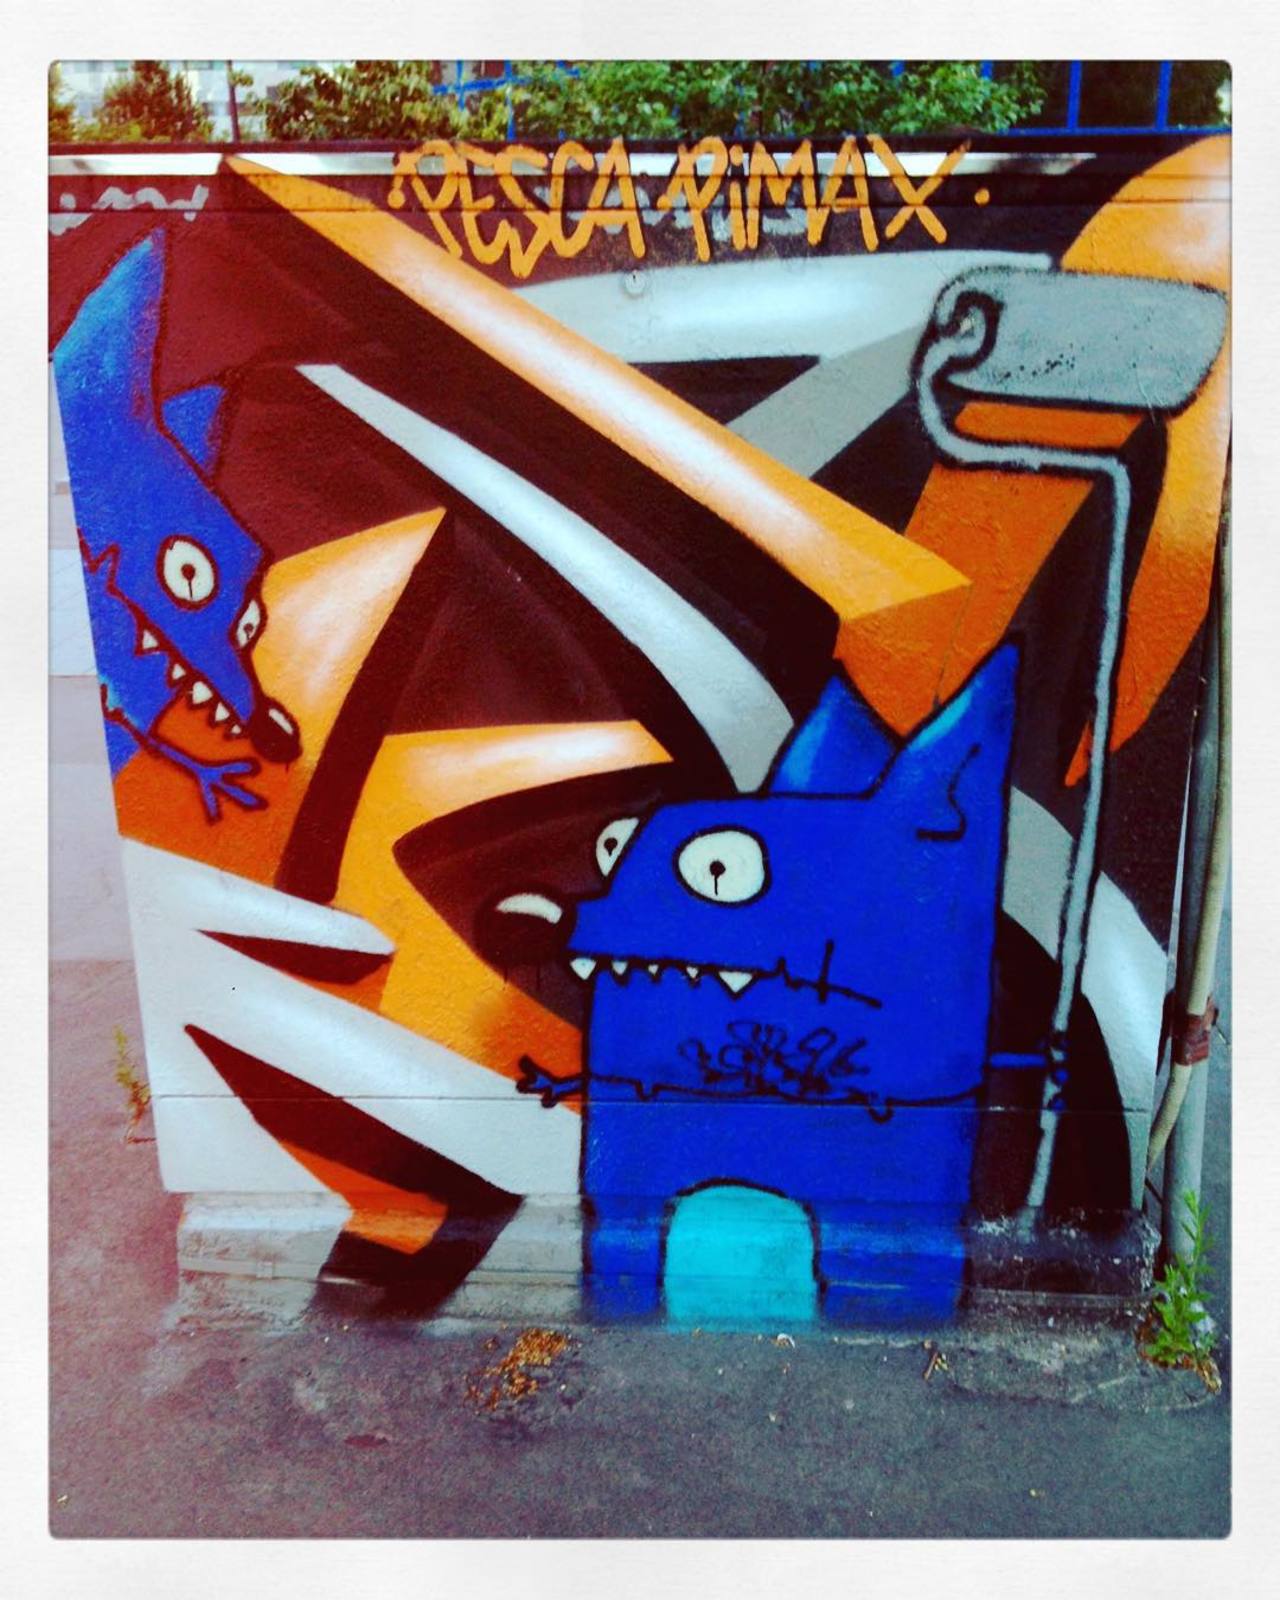 #Paris #graffiti photo by @cibti4987 http://ift.tt/206rh2H #StreetArt https://t.co/wcy1rAp7mr